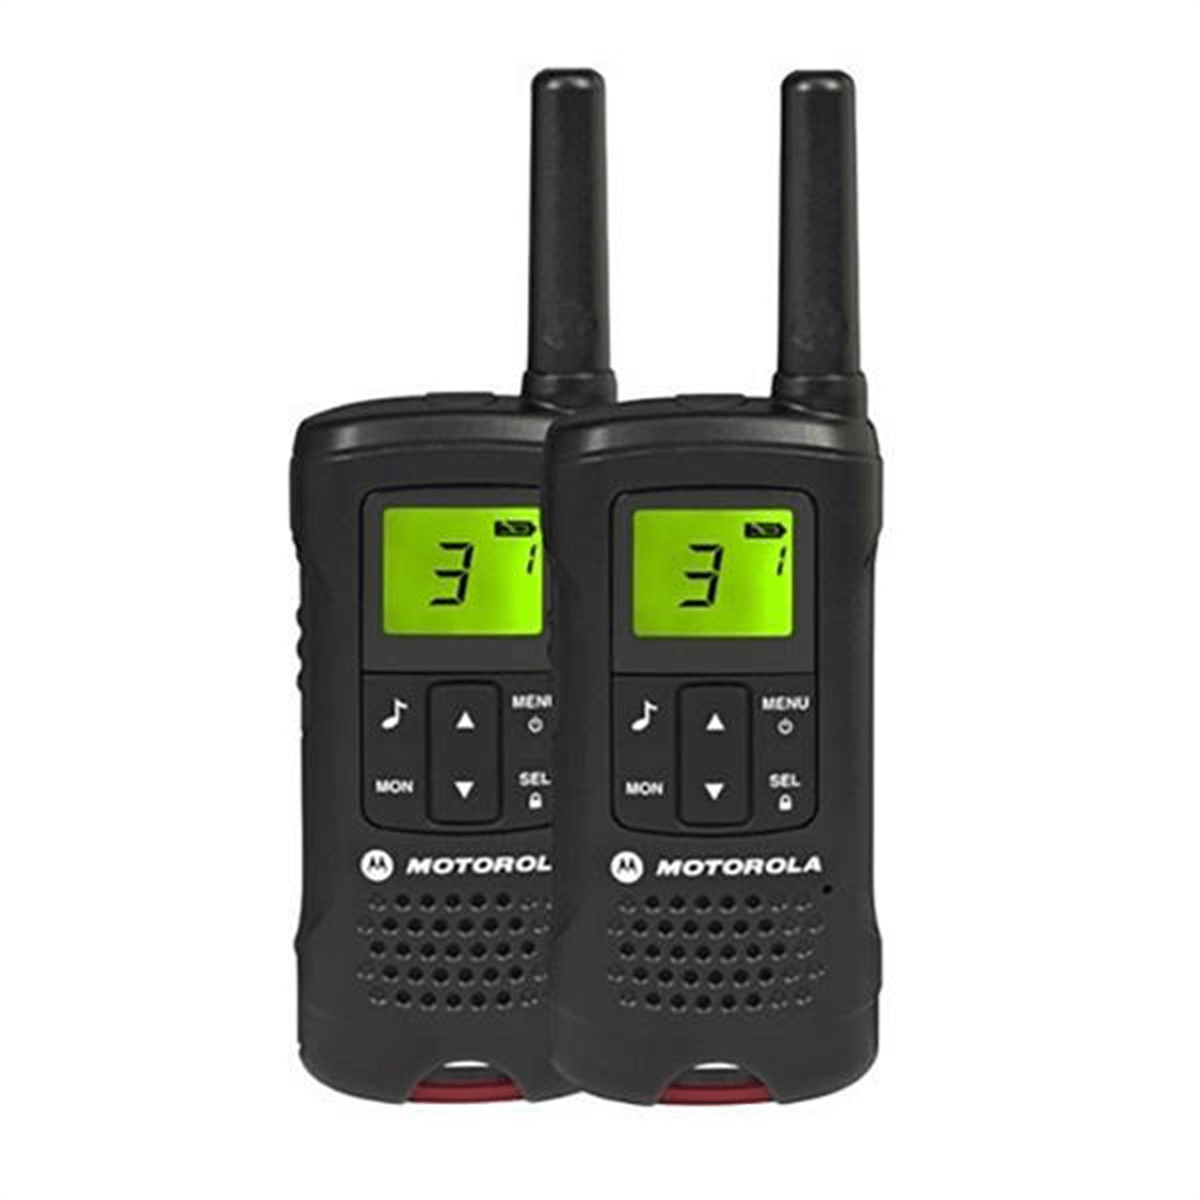 Motorola TLKR-T61 El Telsizi (PMR) Pil Ve Şarj Dahil ikili Set | Mobicaps